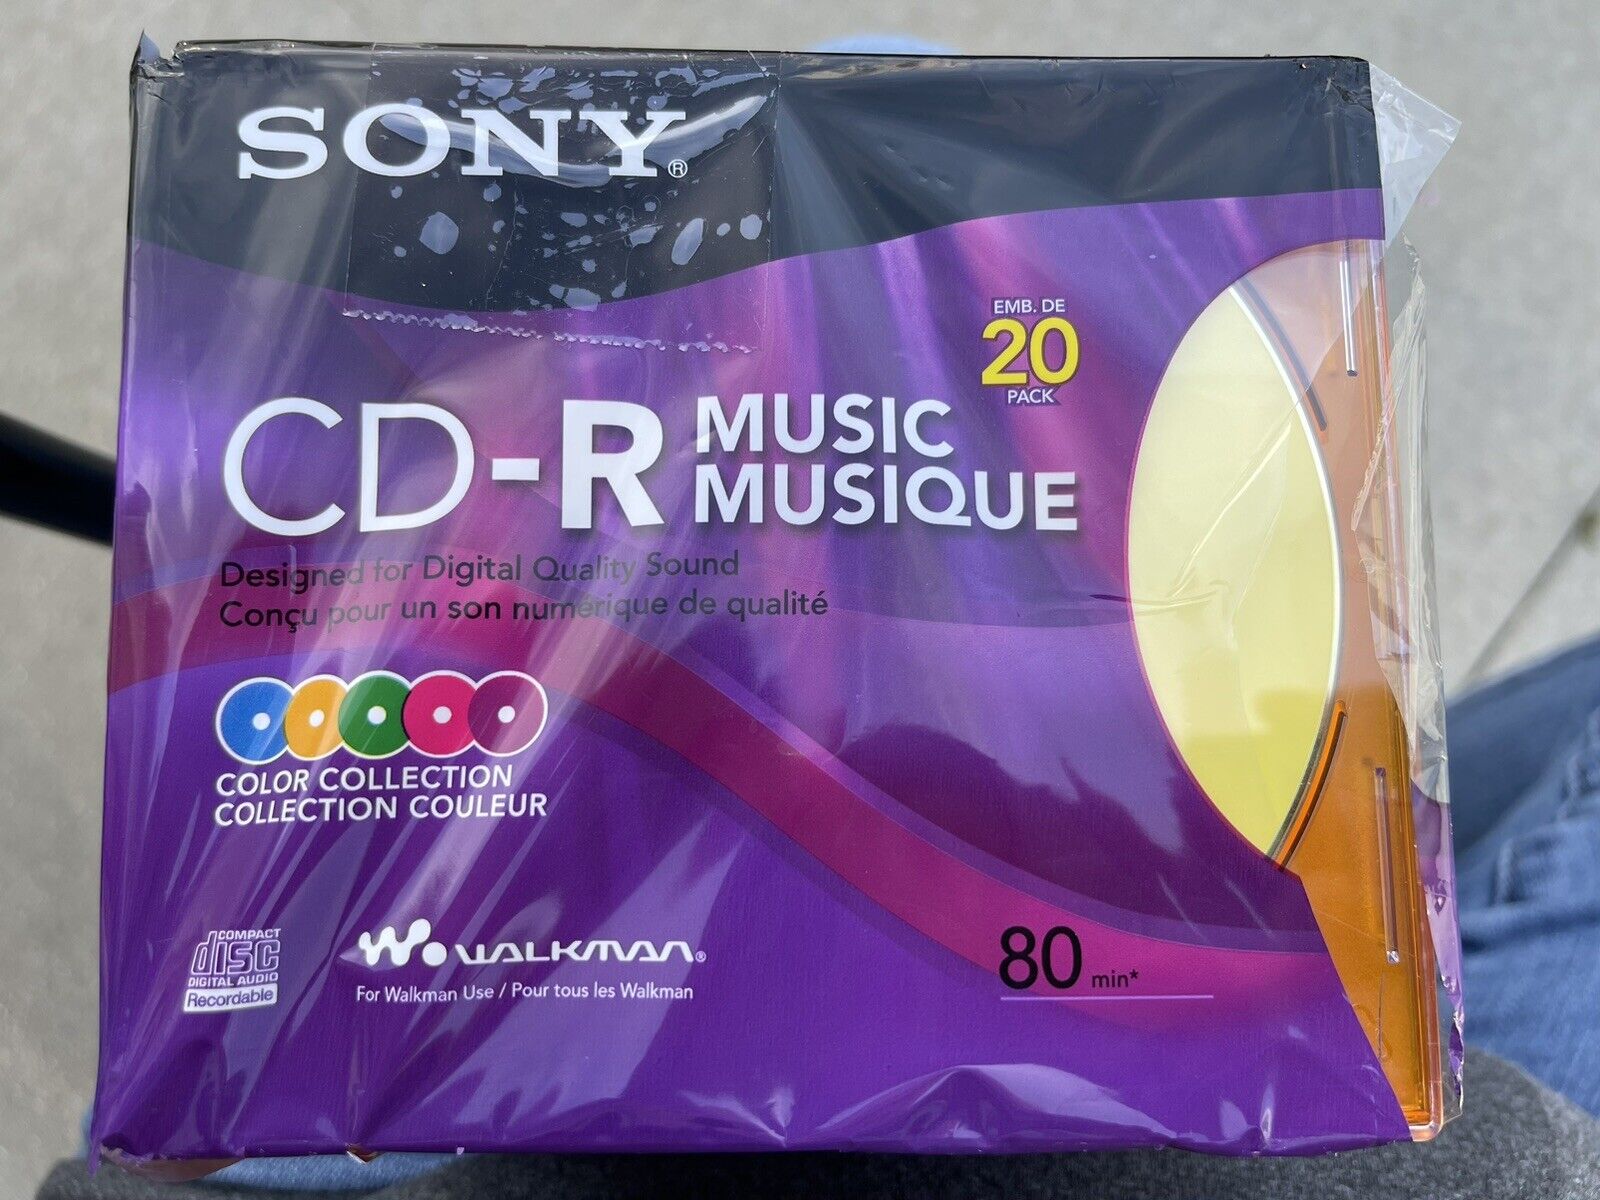 Sony CD-R Music CDs 20 Pack Slim Color Jewel Cases 80 Min 20CRM80LX2 Walkman 